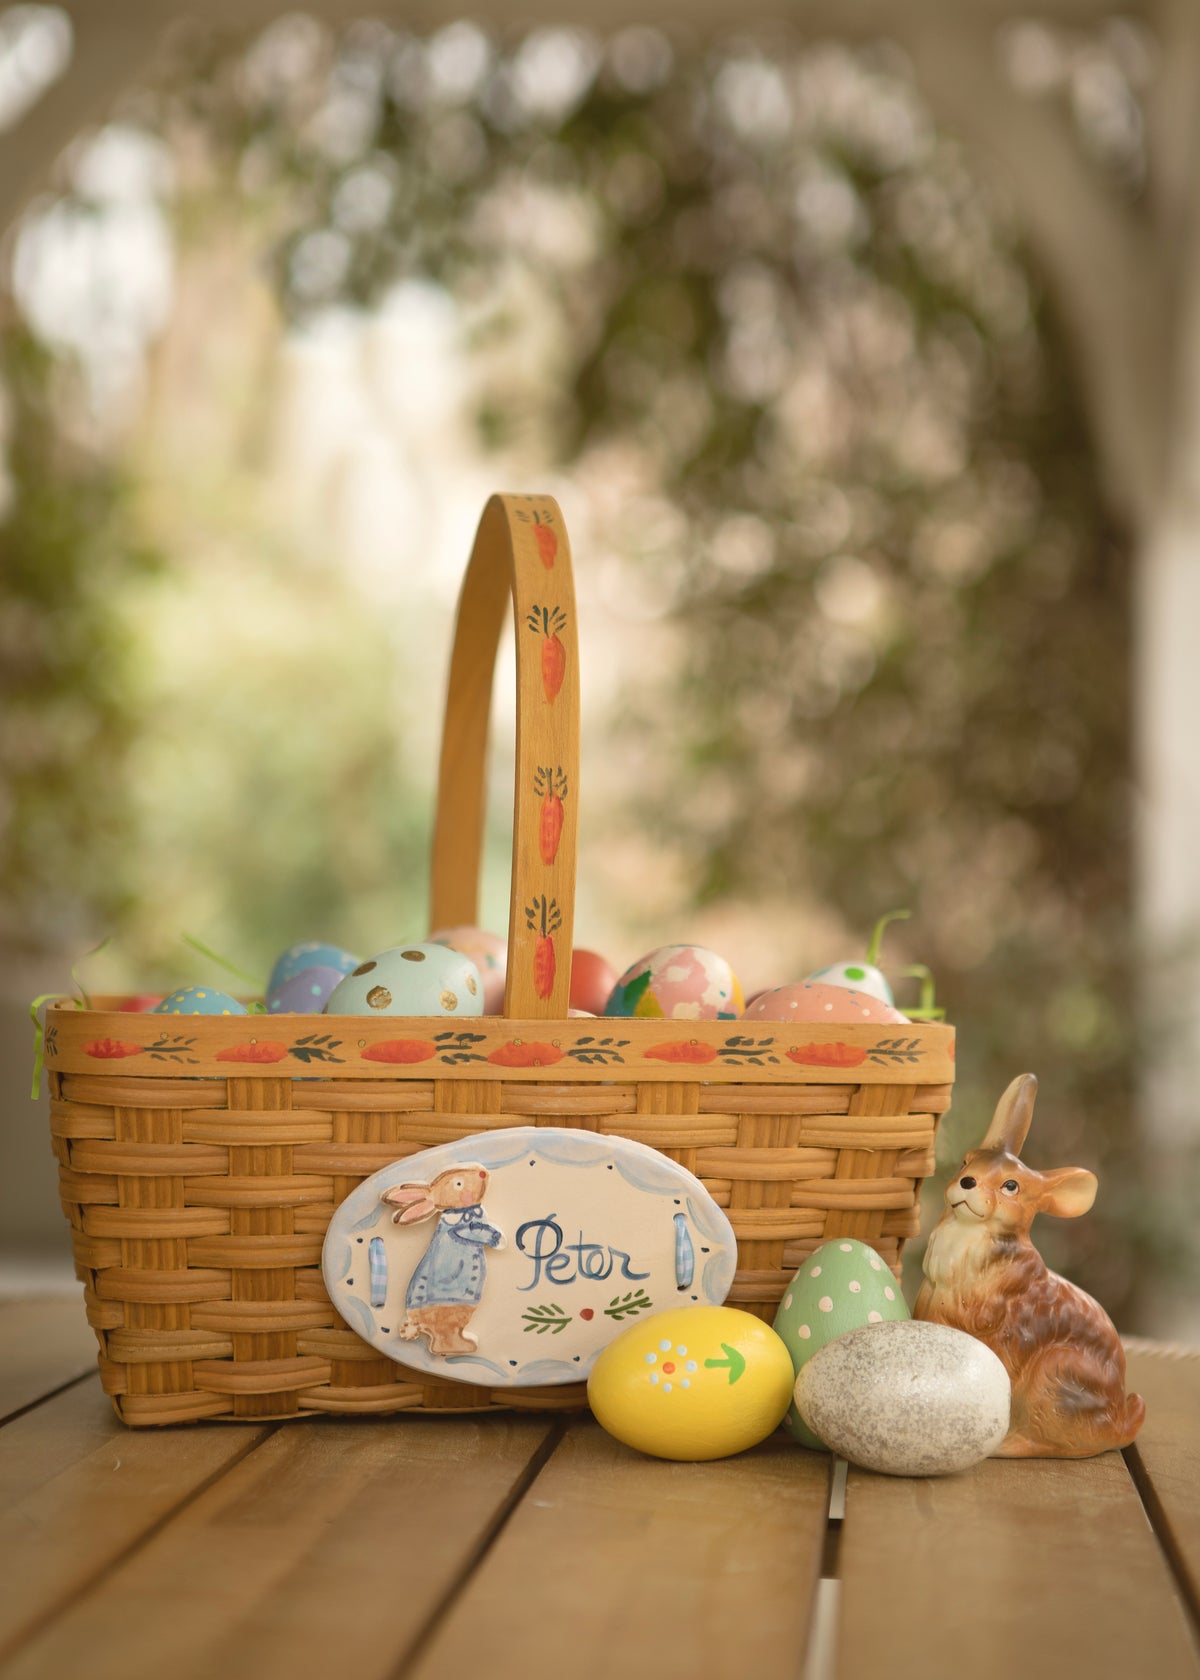 Custom Easter Tumblers // Easter Basket Gifts